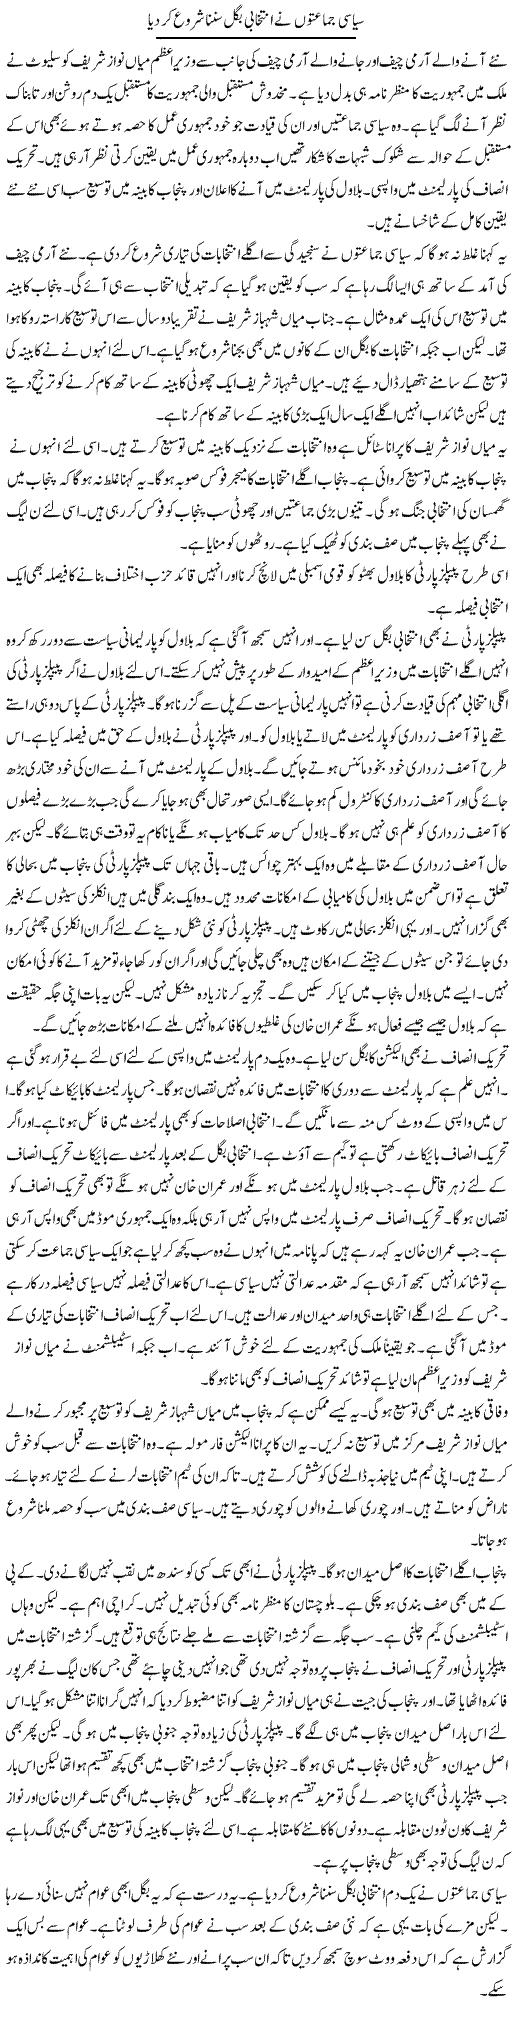 Siasi Jamaton Ne Intikhabi Bigal Sunna Shuru Kar Diya | Muzamal Suharwardy | Daily Urdu Columns